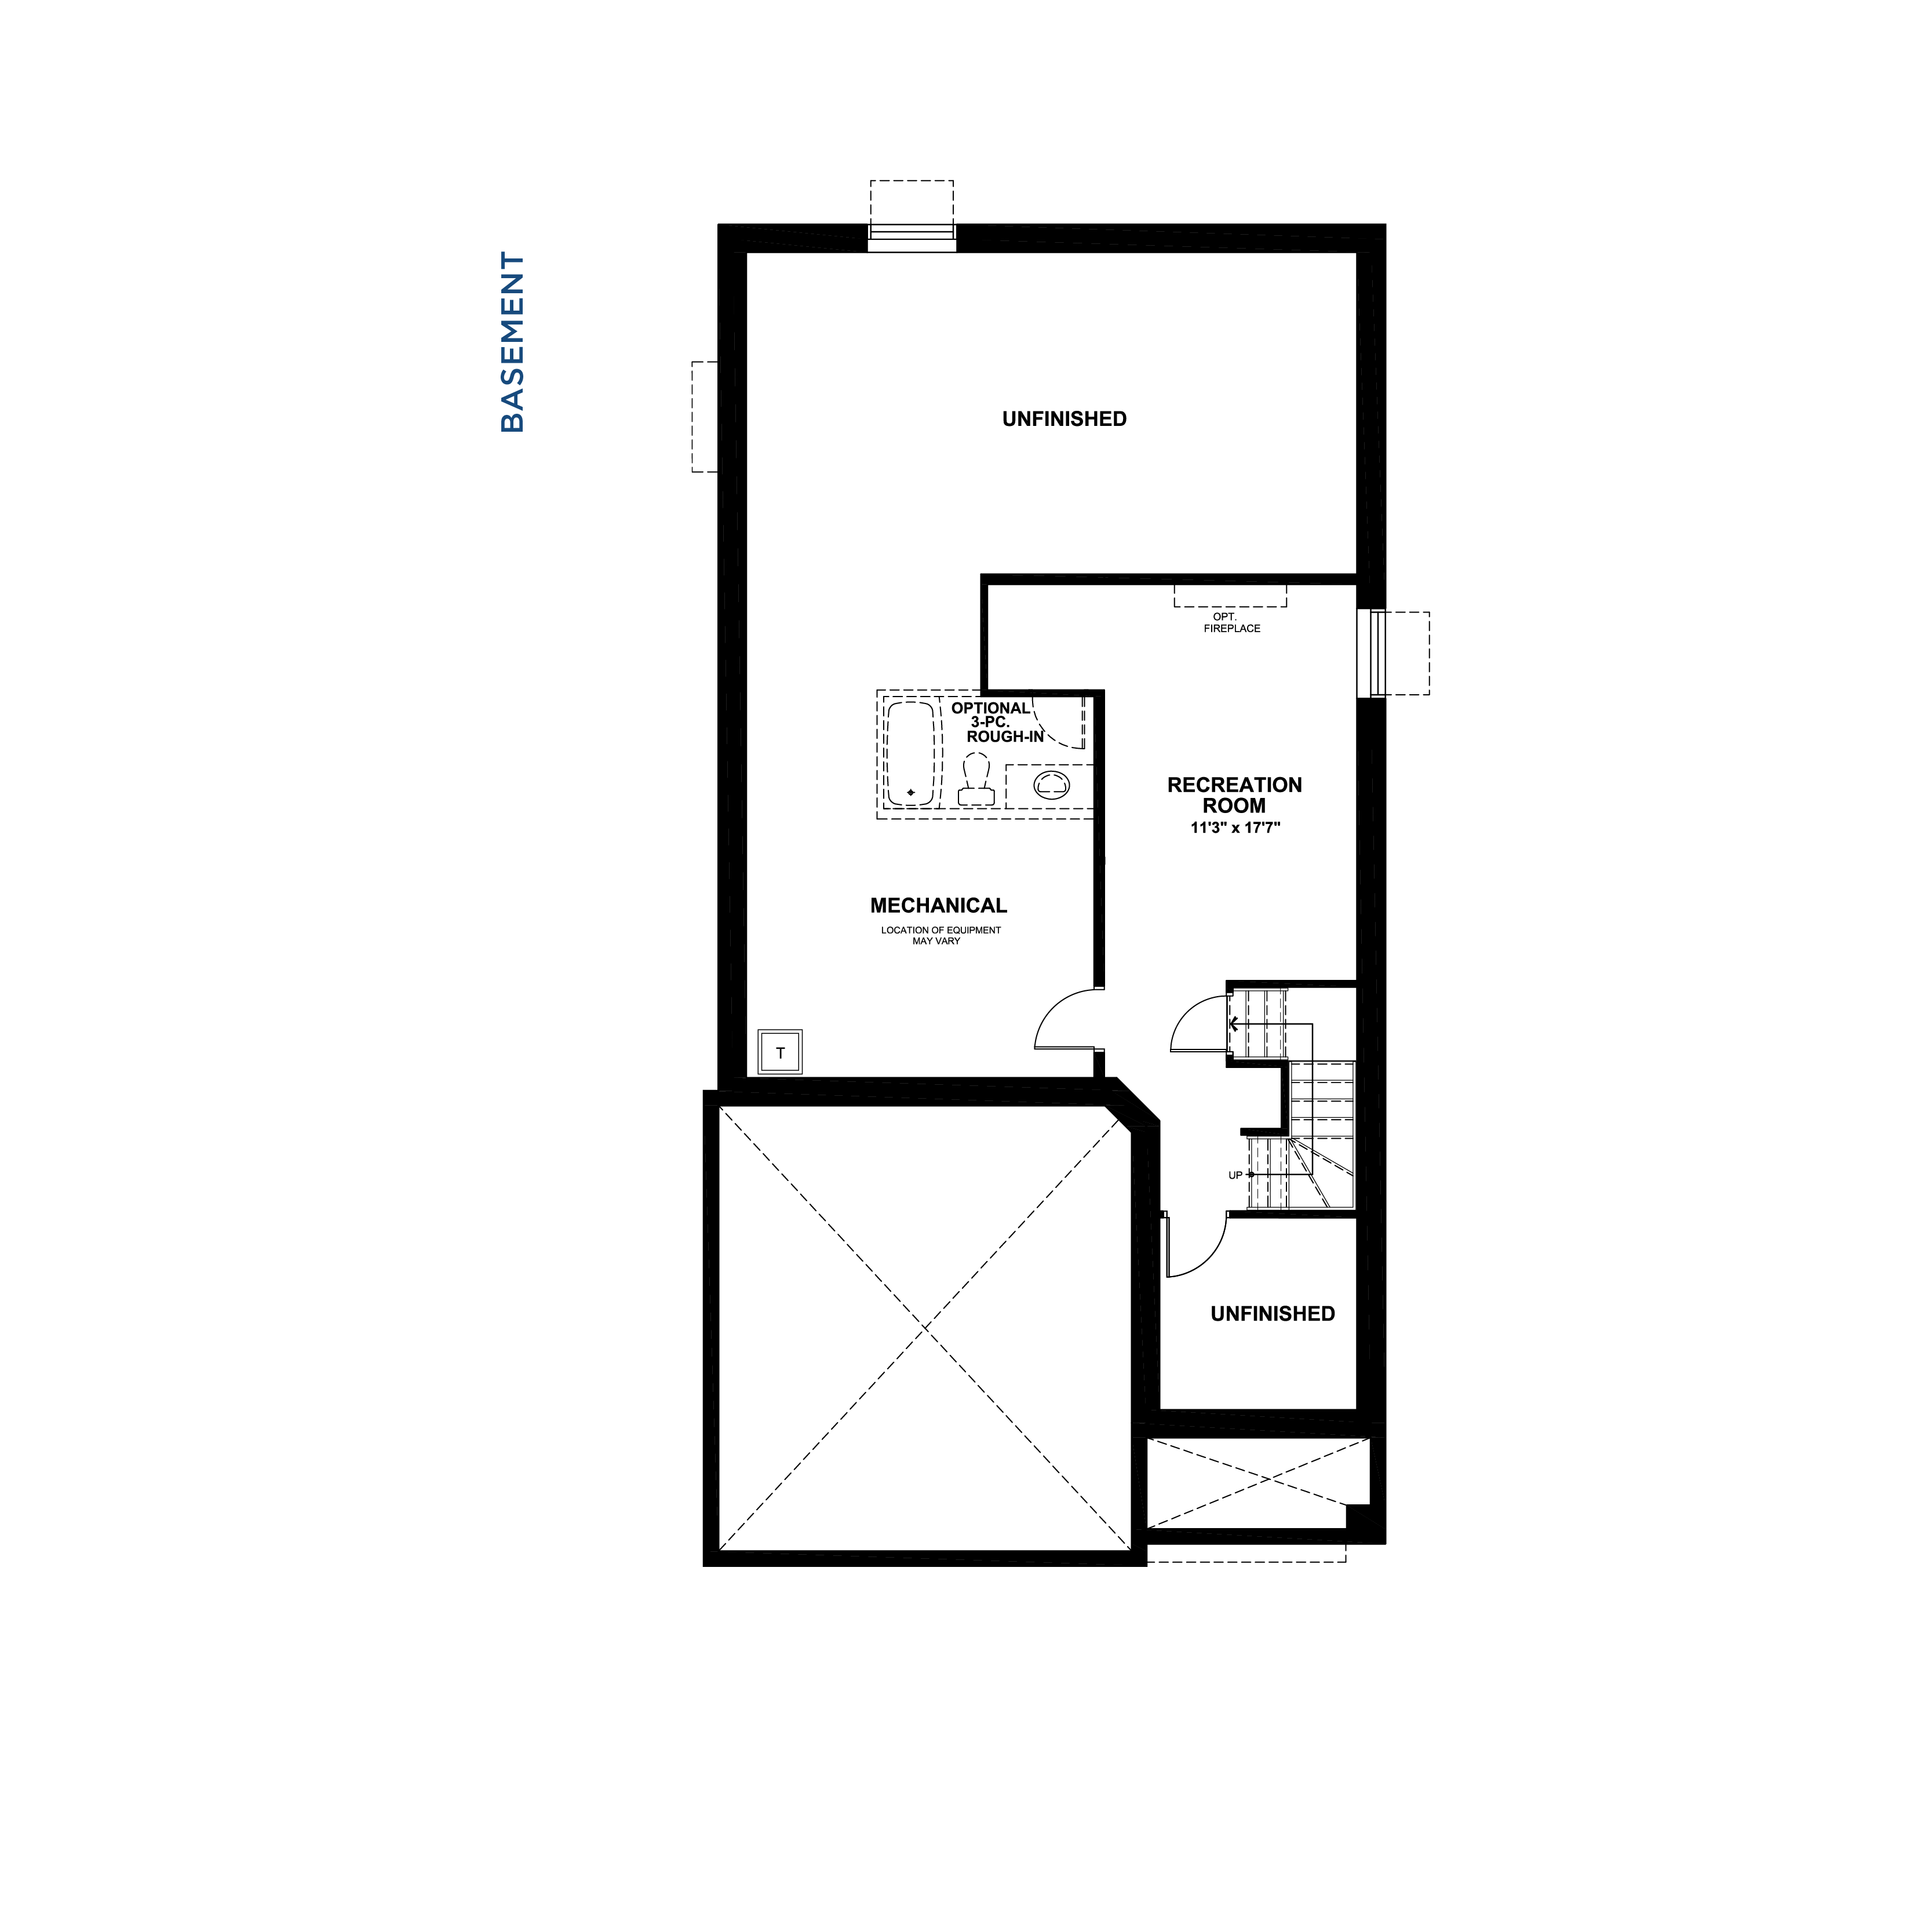 Floorplan Basement Level - Turner